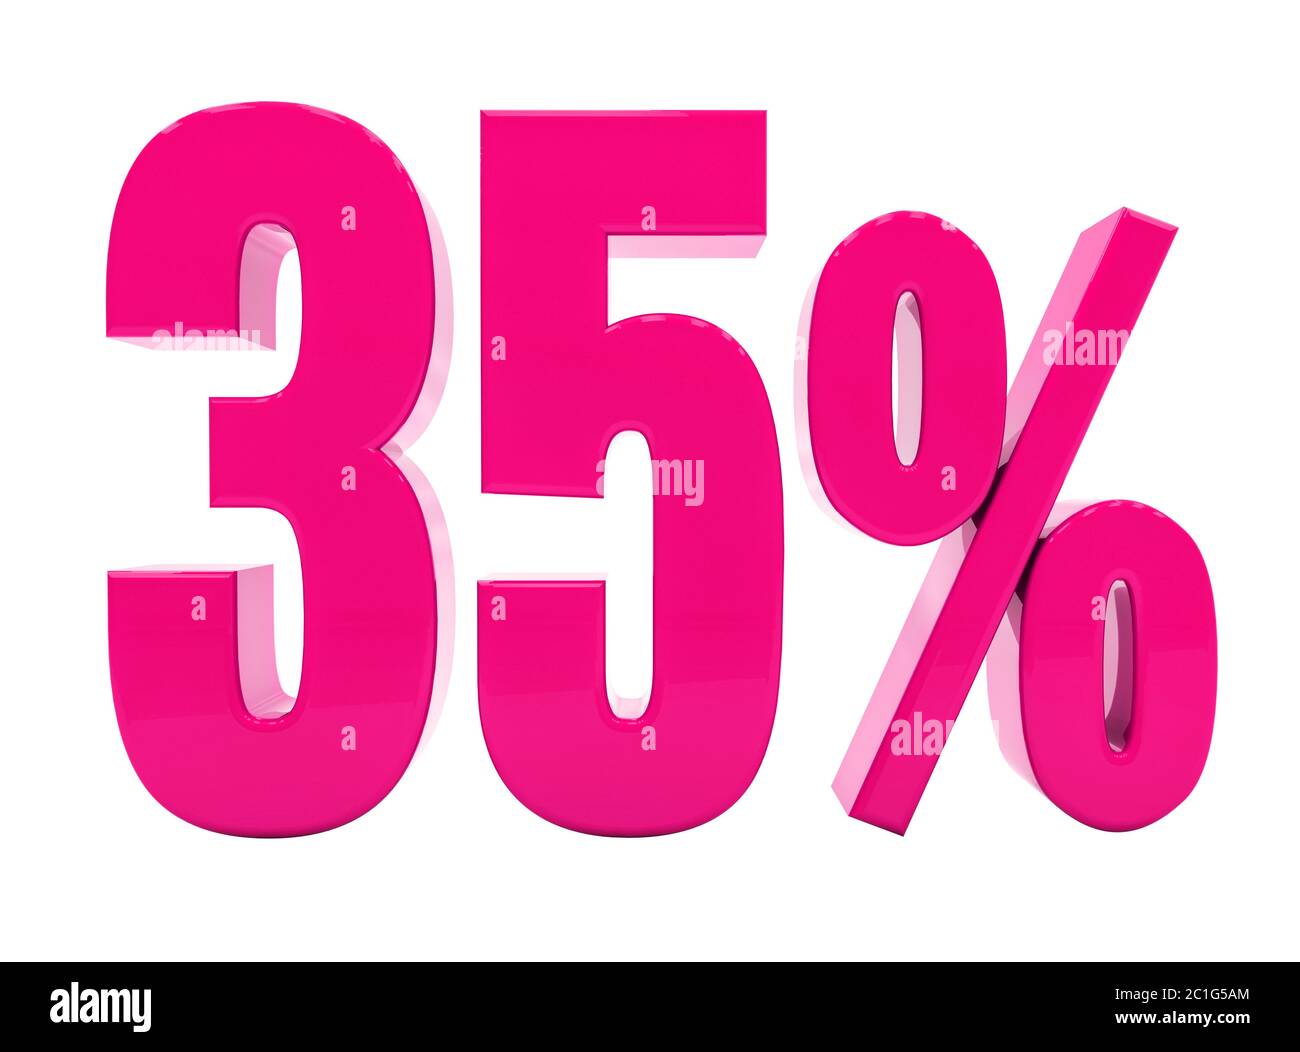 35-percent-pink-sign-stock-photo-alamy